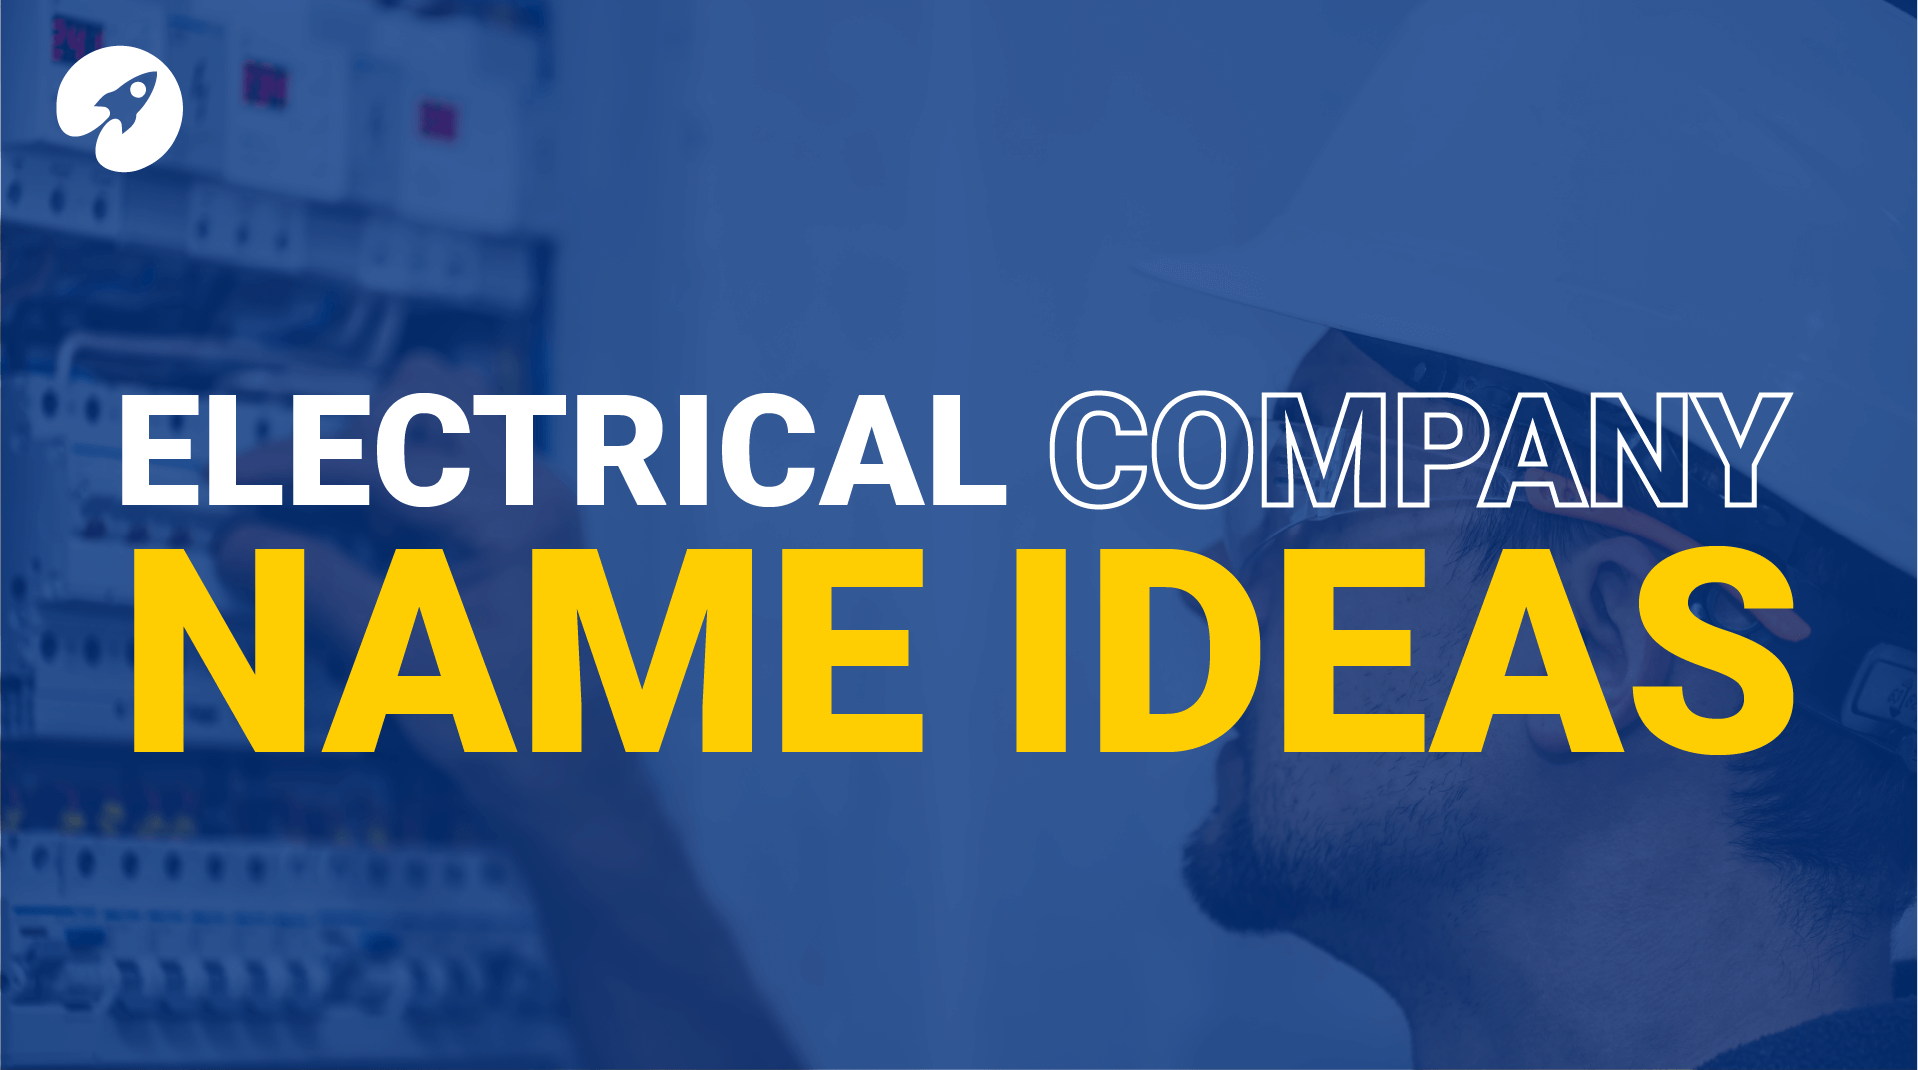 Electrical company name ideas, creative name ideas you would actually use